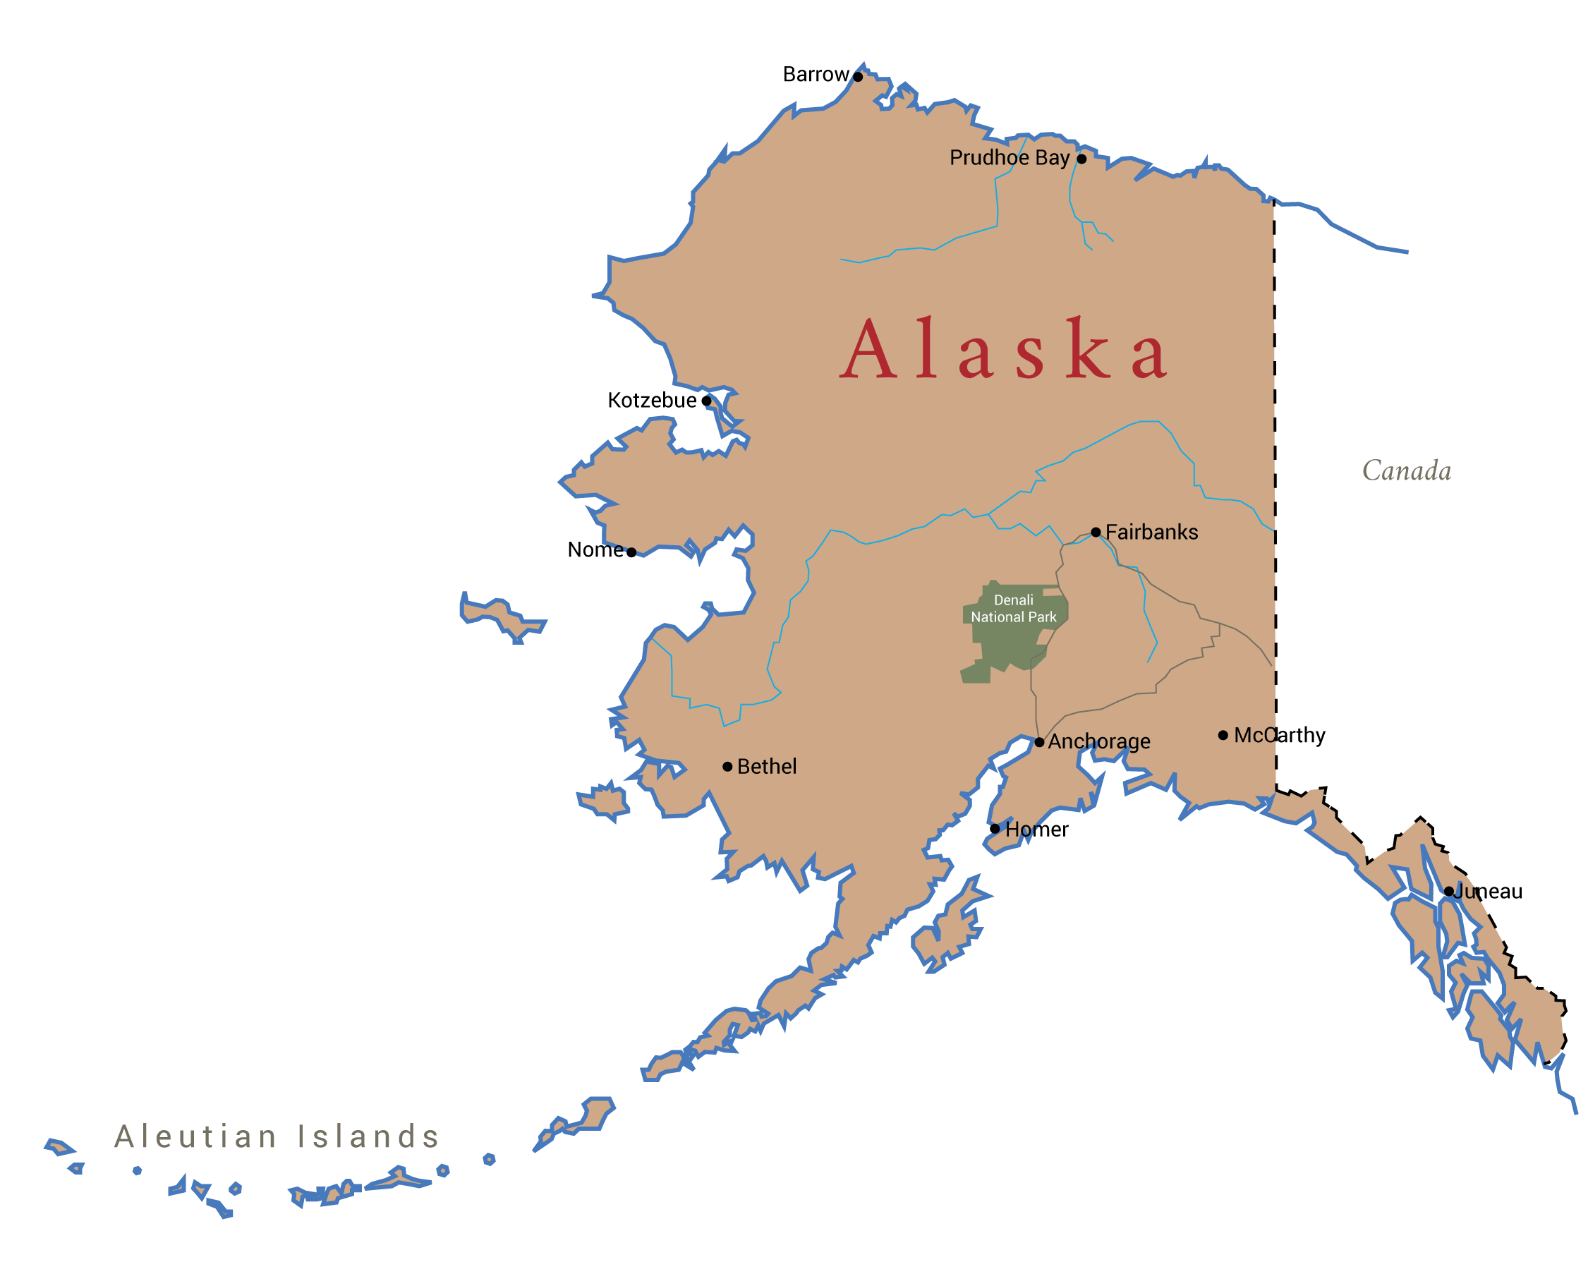 Red Savannah branded map of Alaska, USA